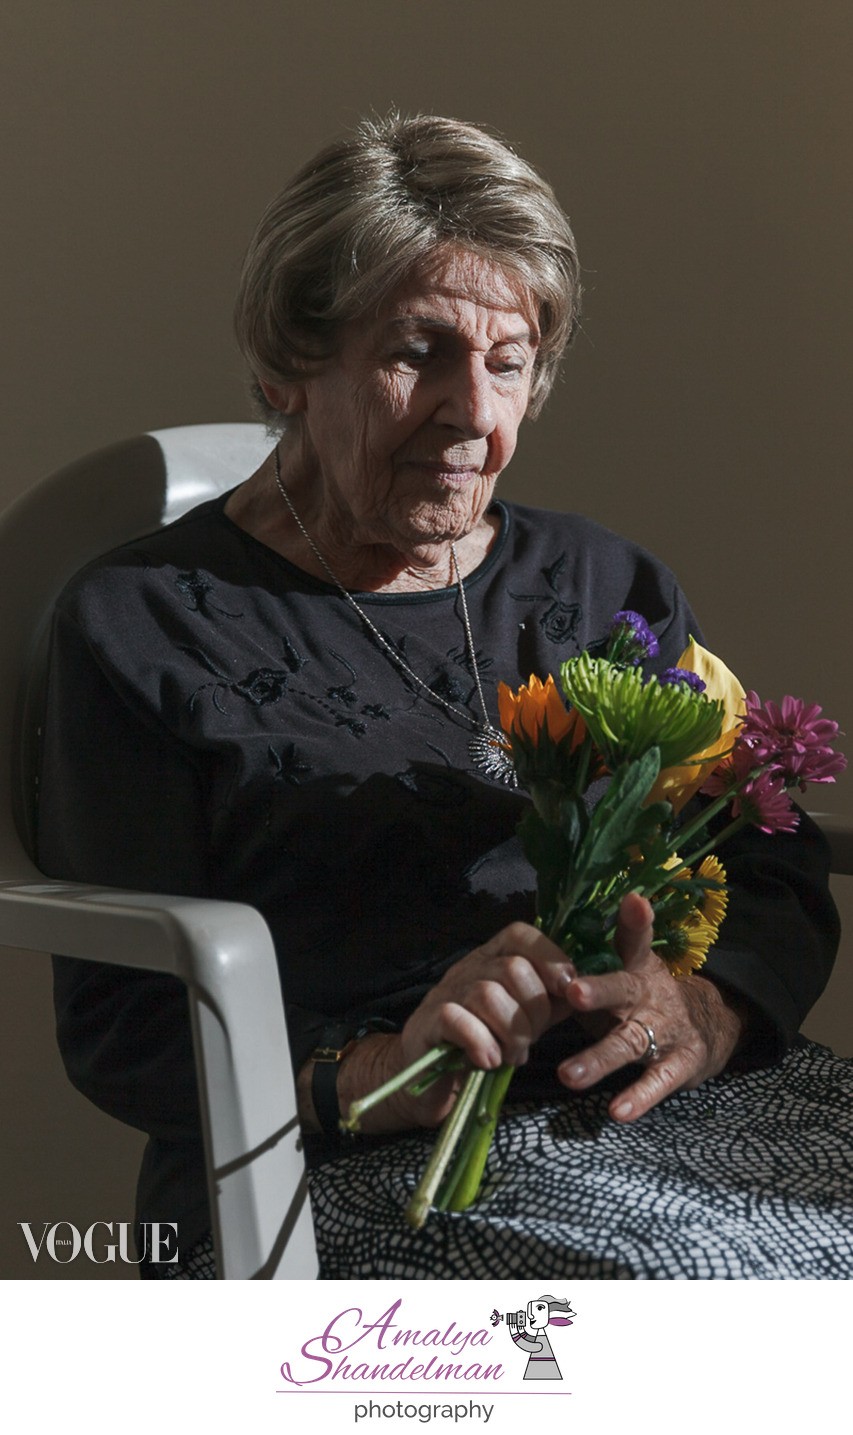 Awarded fine-art portrait of woman with flowers